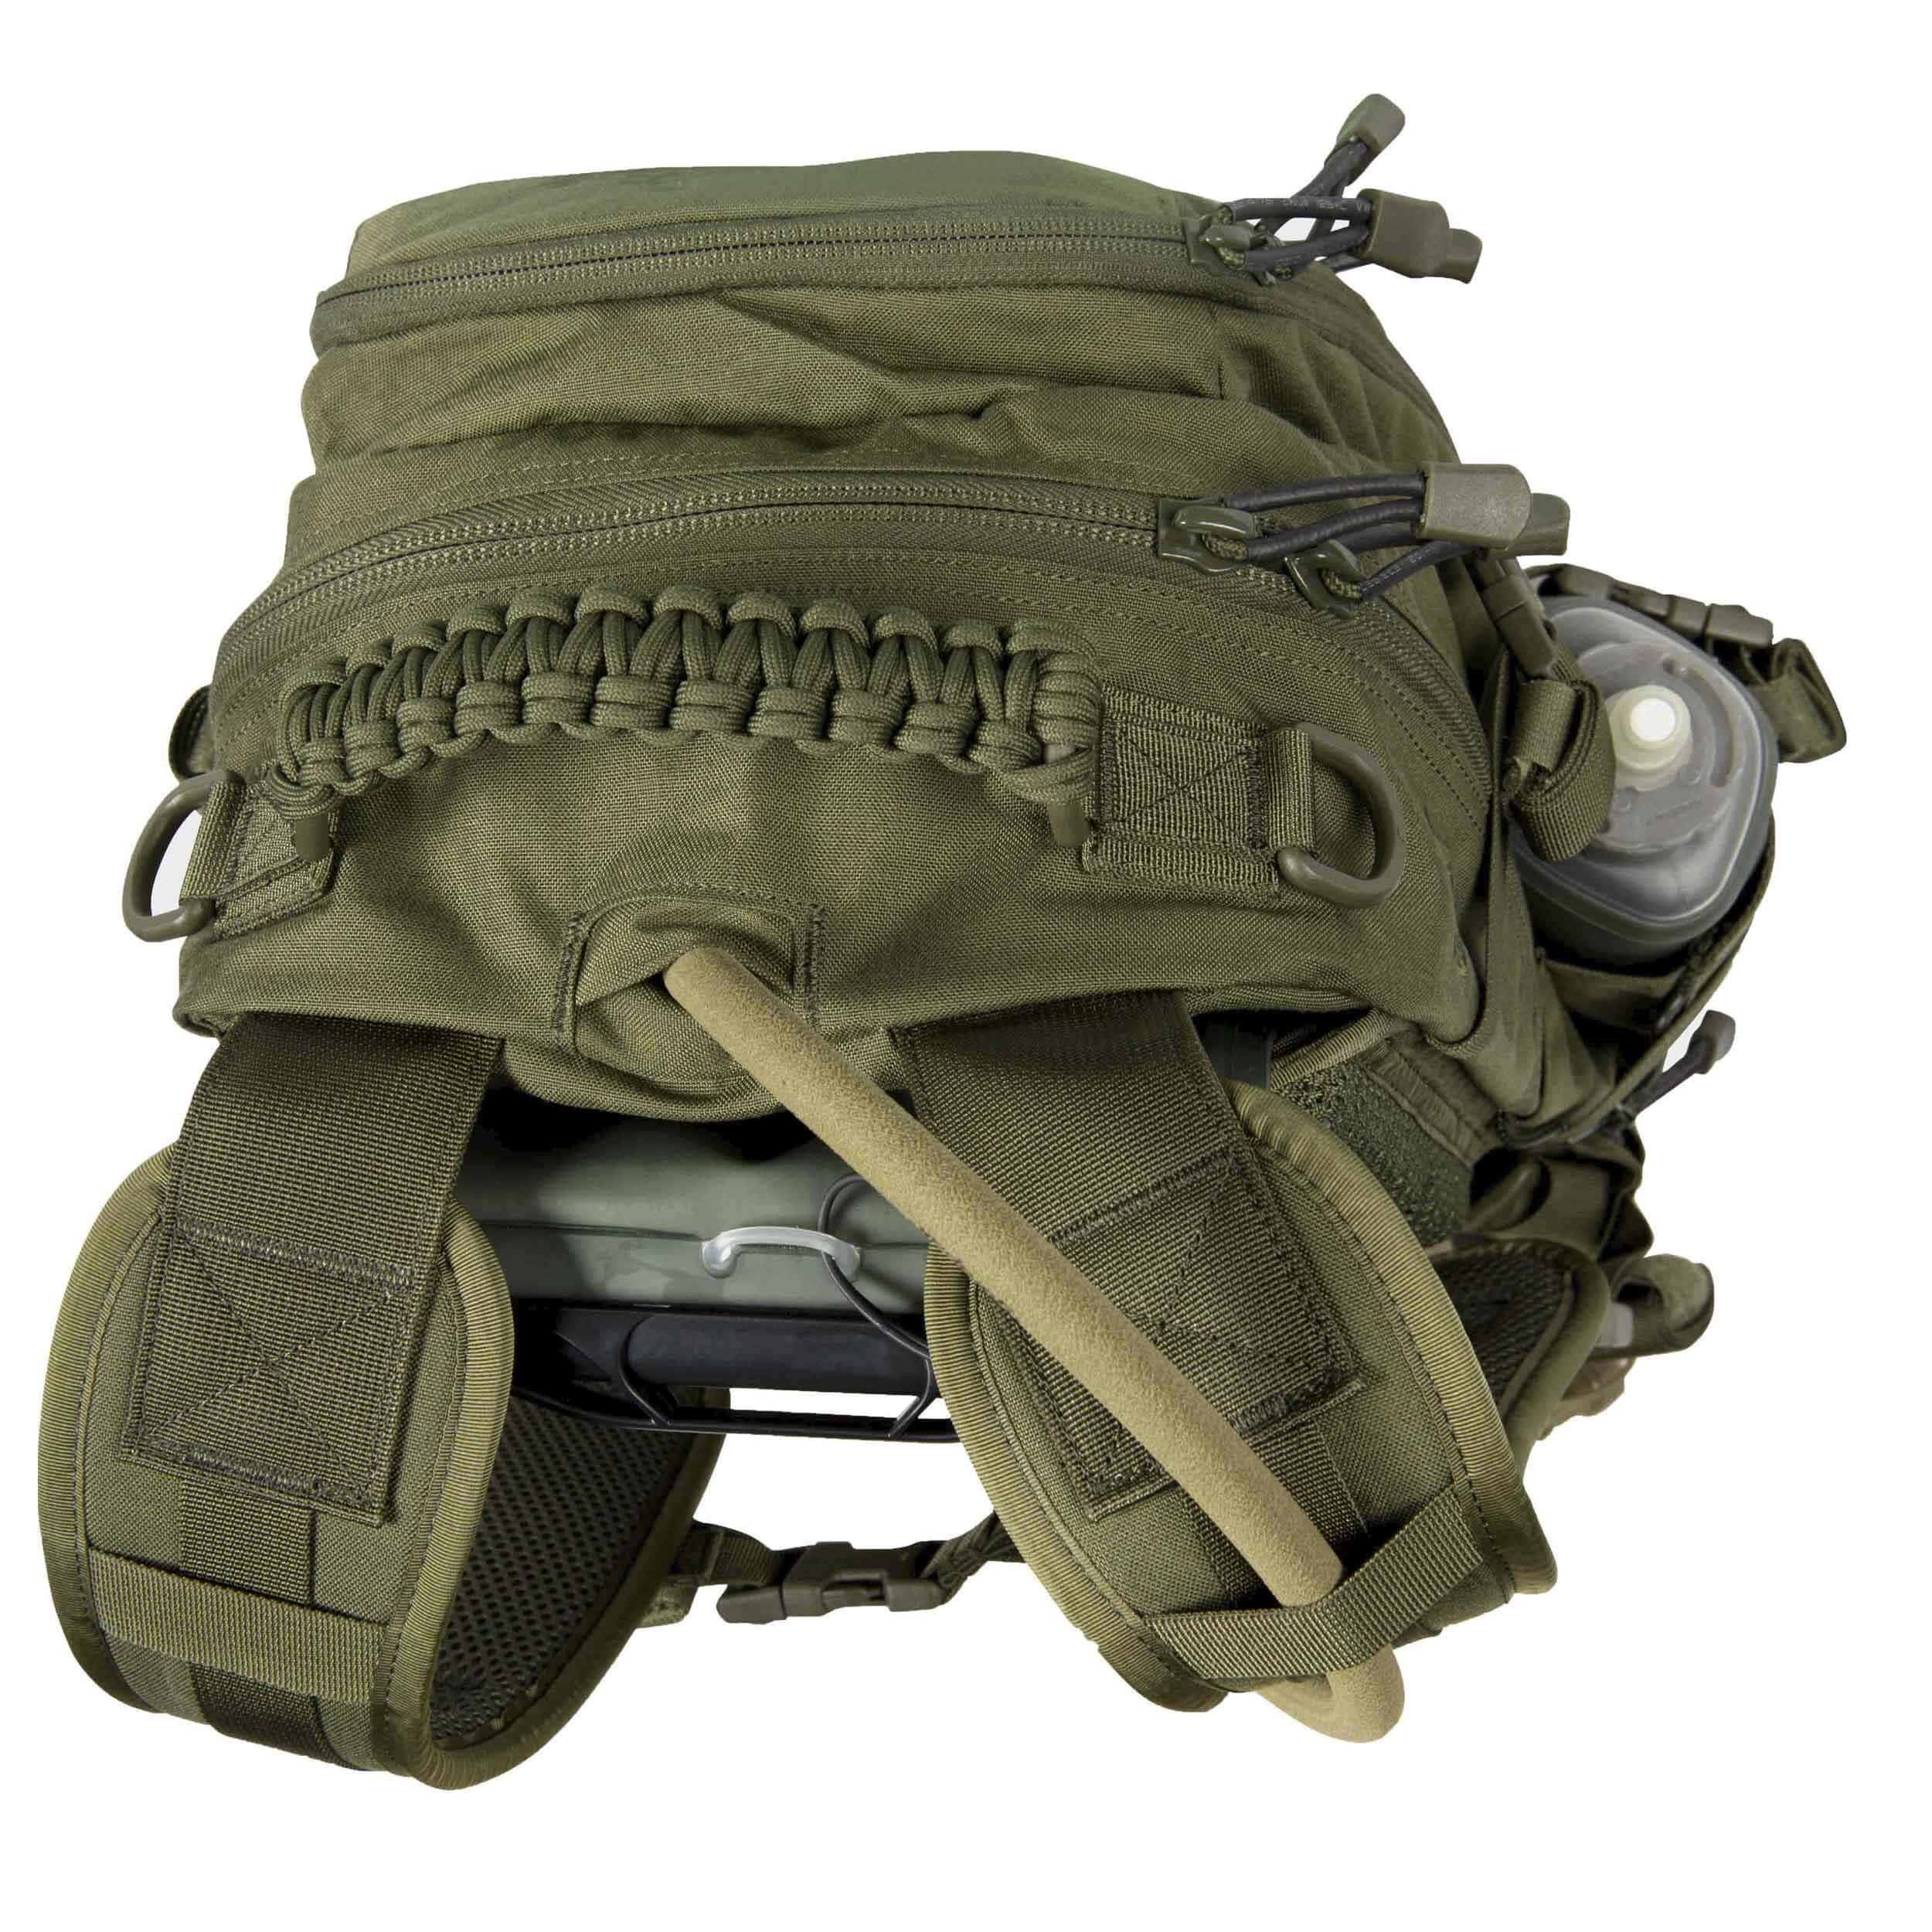 Direct Action DUST® MkII Backpack - Cordura® - Urban Grey